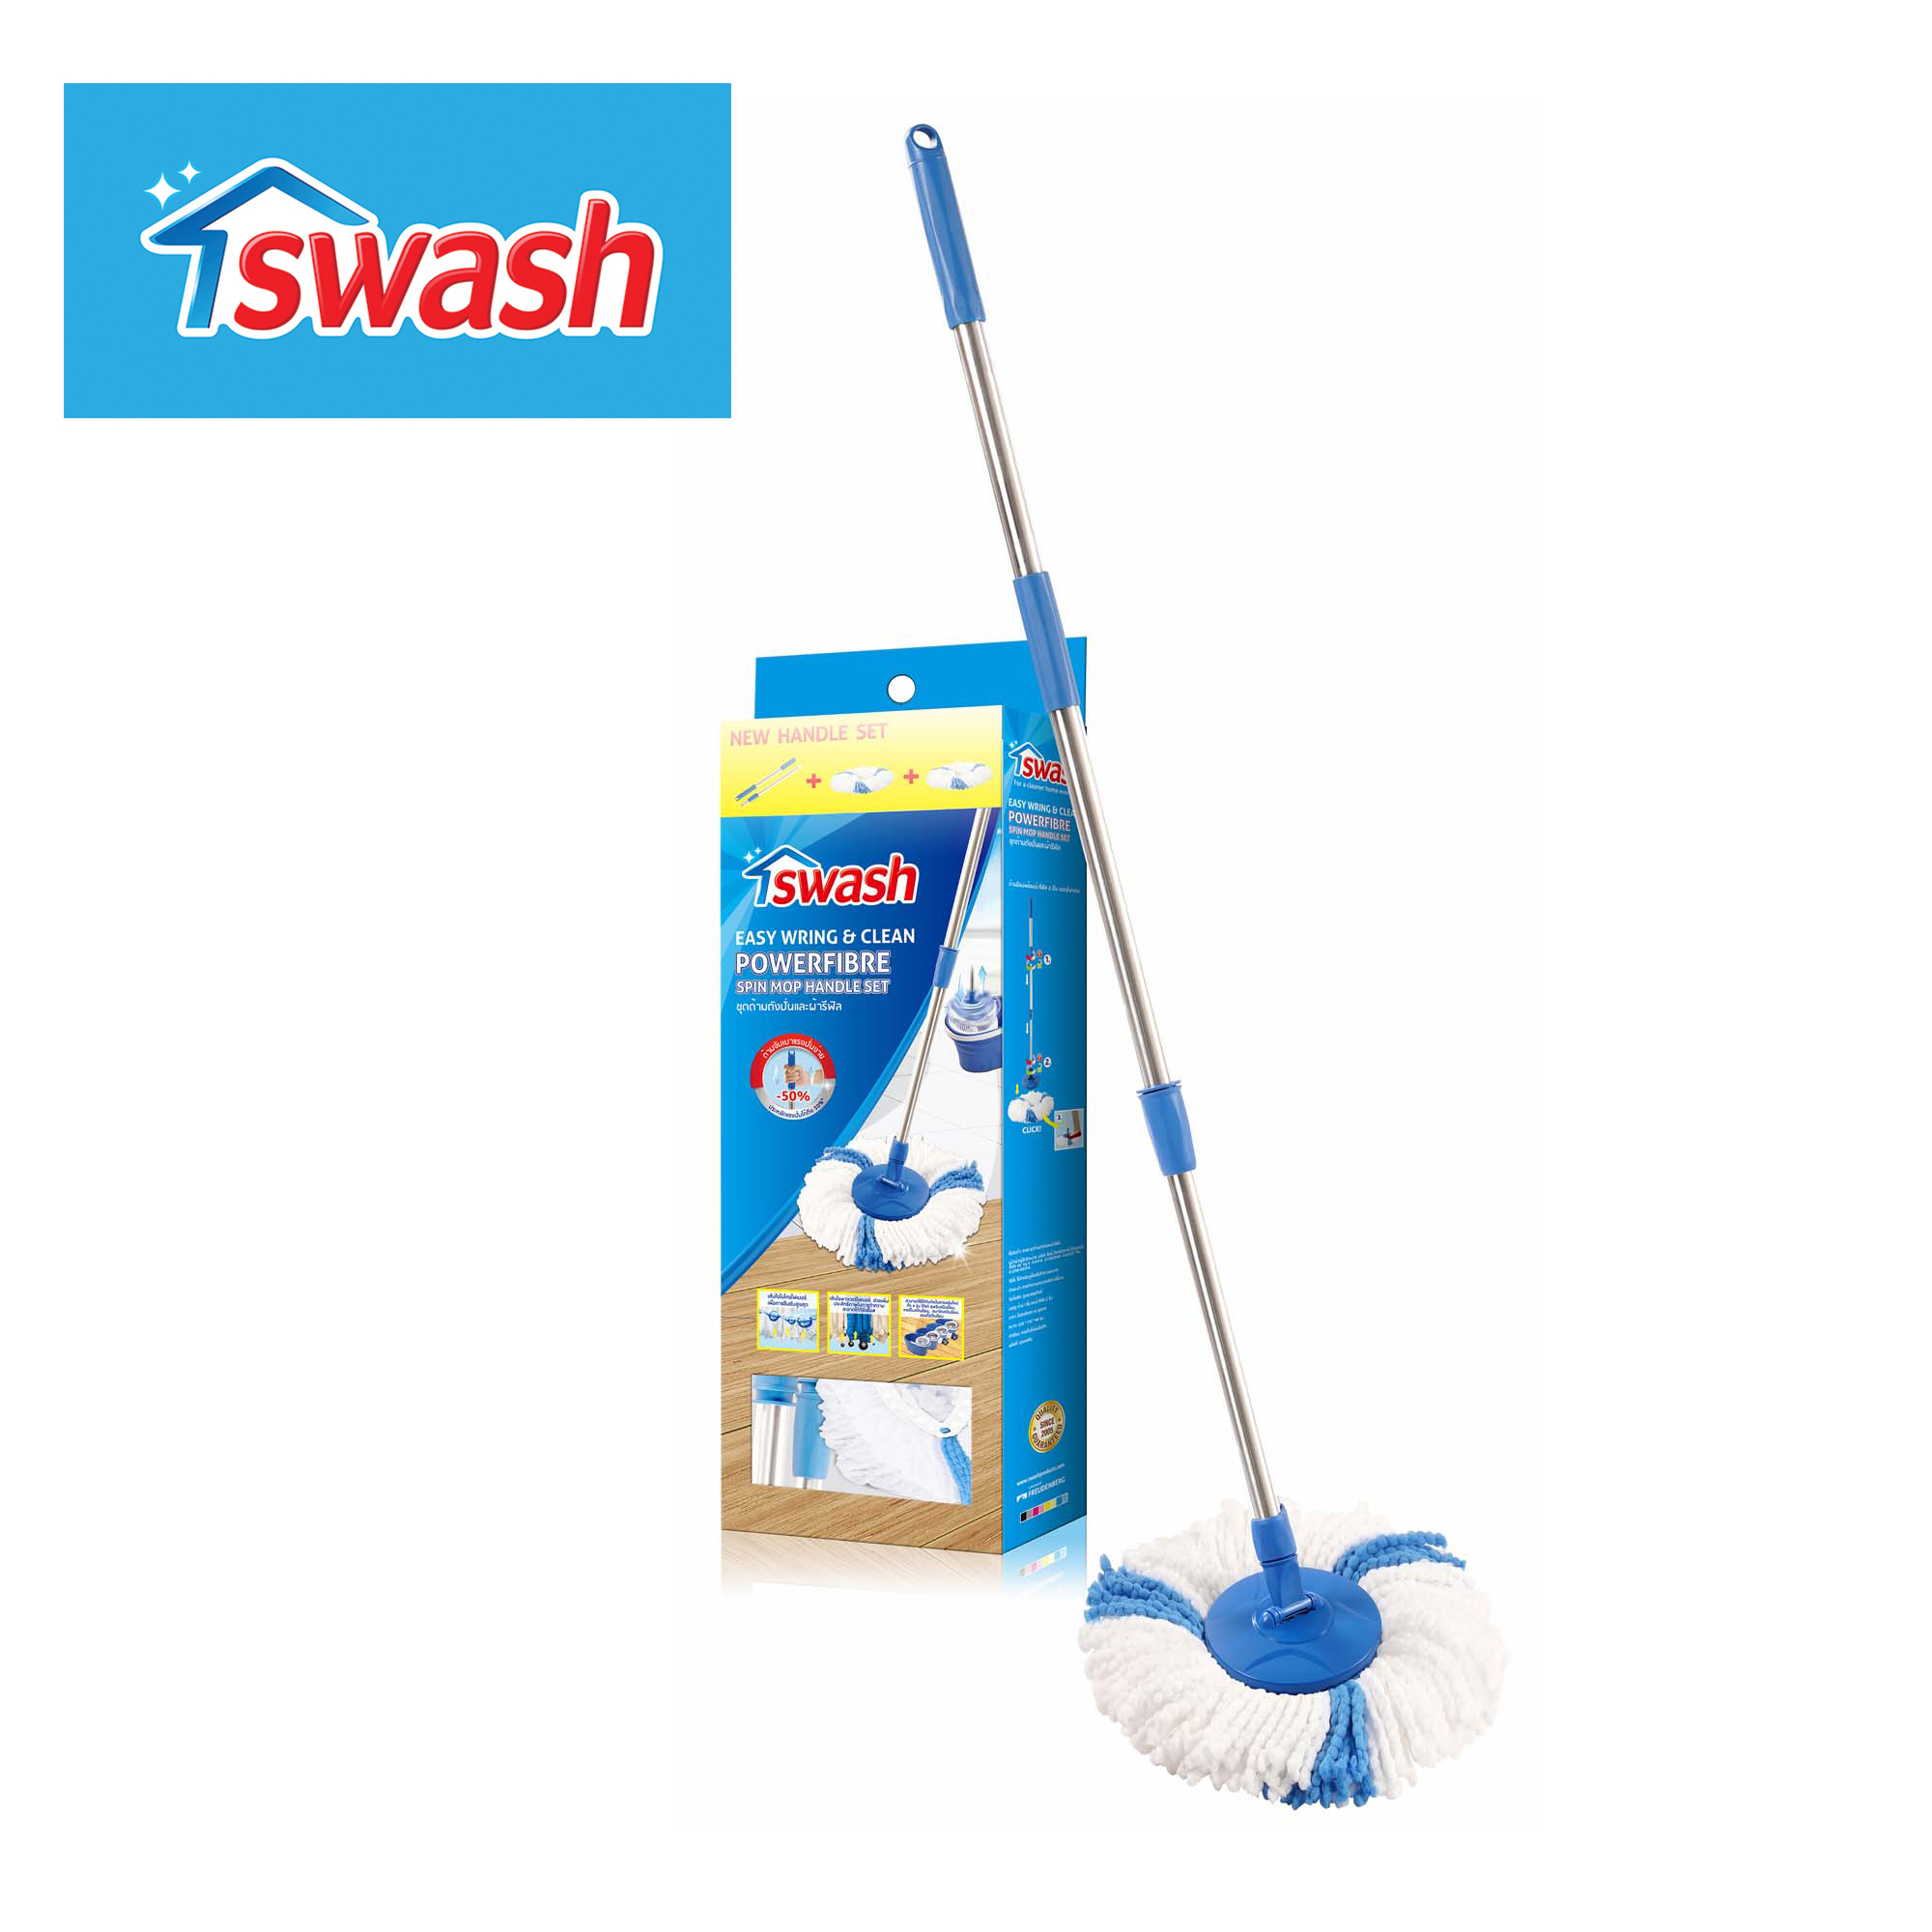 SWASH Easy Wring & Clean Spin Mop Handle Set - สวอช อีซี่ริงแอนด์คลีน ชุดด้ามถังปั่นและผ้ารีฟิล อะไหล่ไม้ม็อบ ไม้ถูพื้น ด้ามม็อบ ม็อบถูพื้น